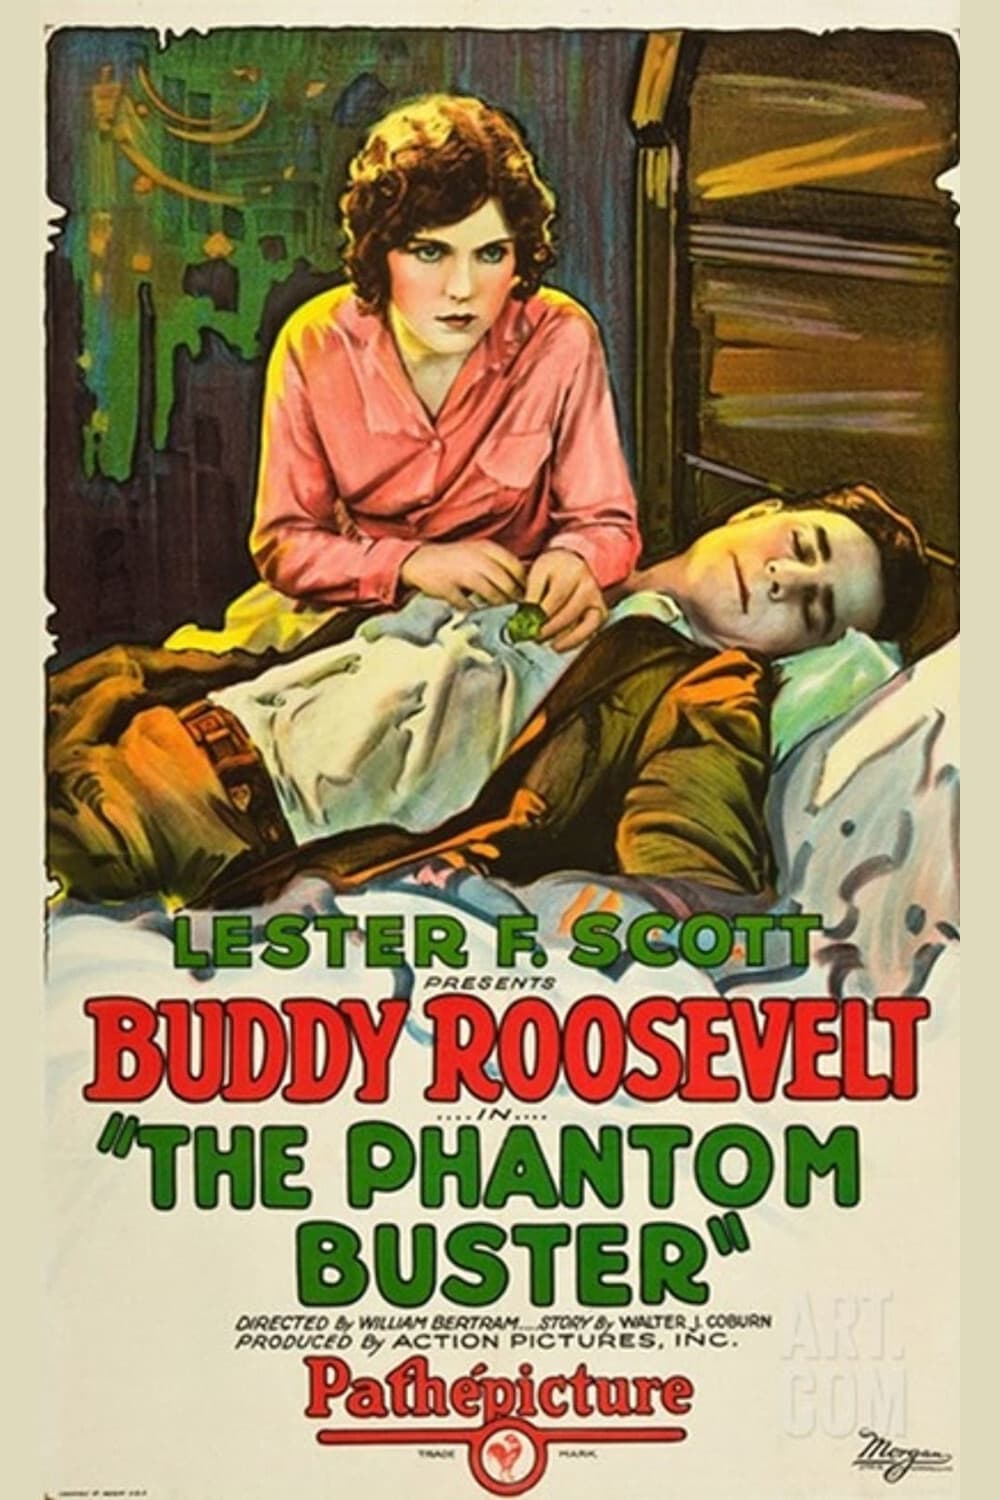 The Phantom Buster (1927)